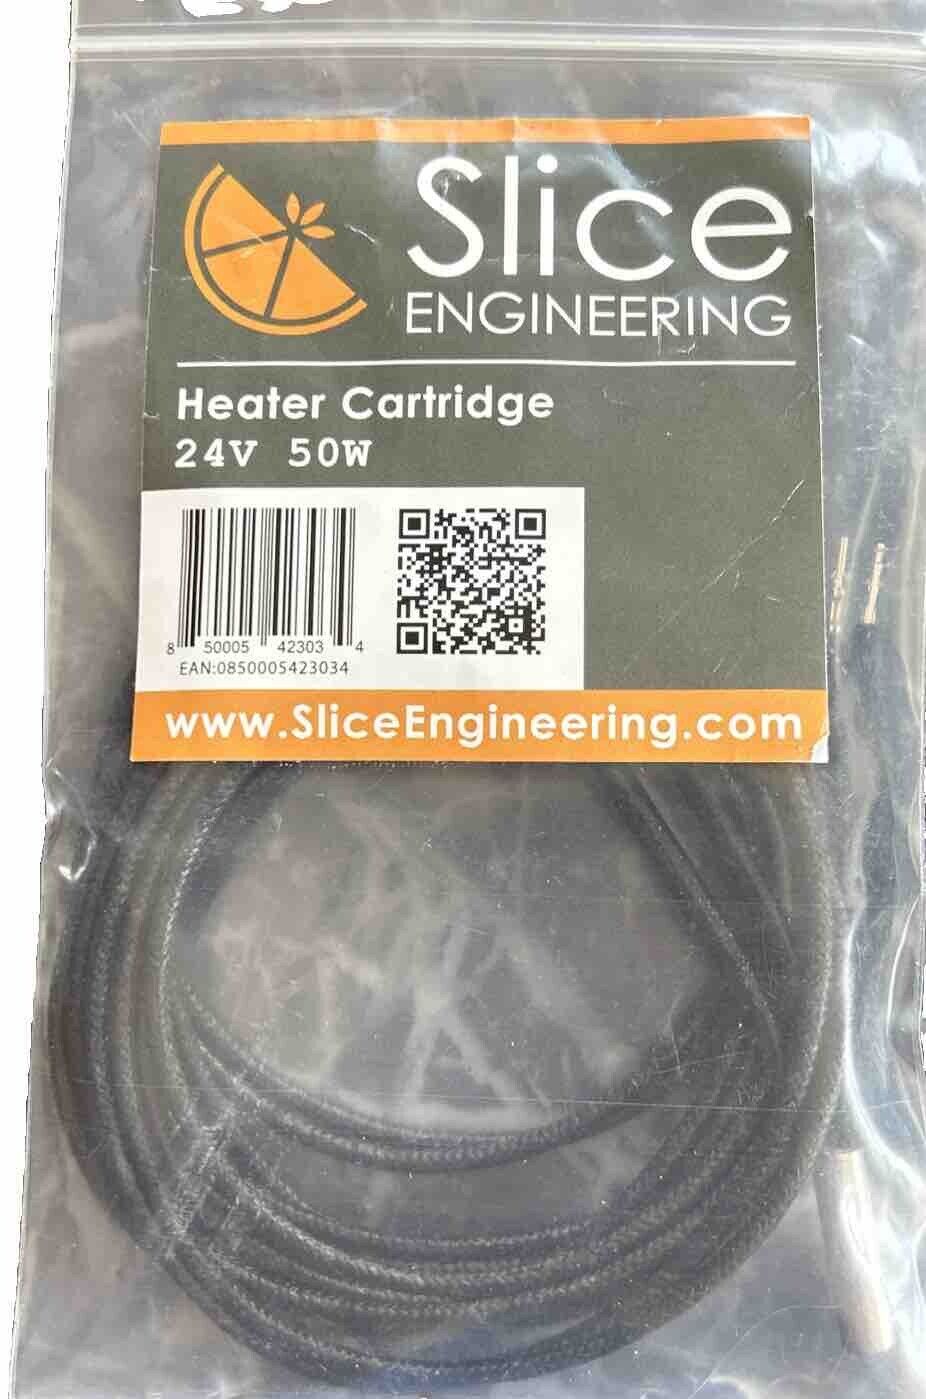 Slice Engineering 50w 24v Heater Cartridge NEW IN SEALED PACKAGING.      P8